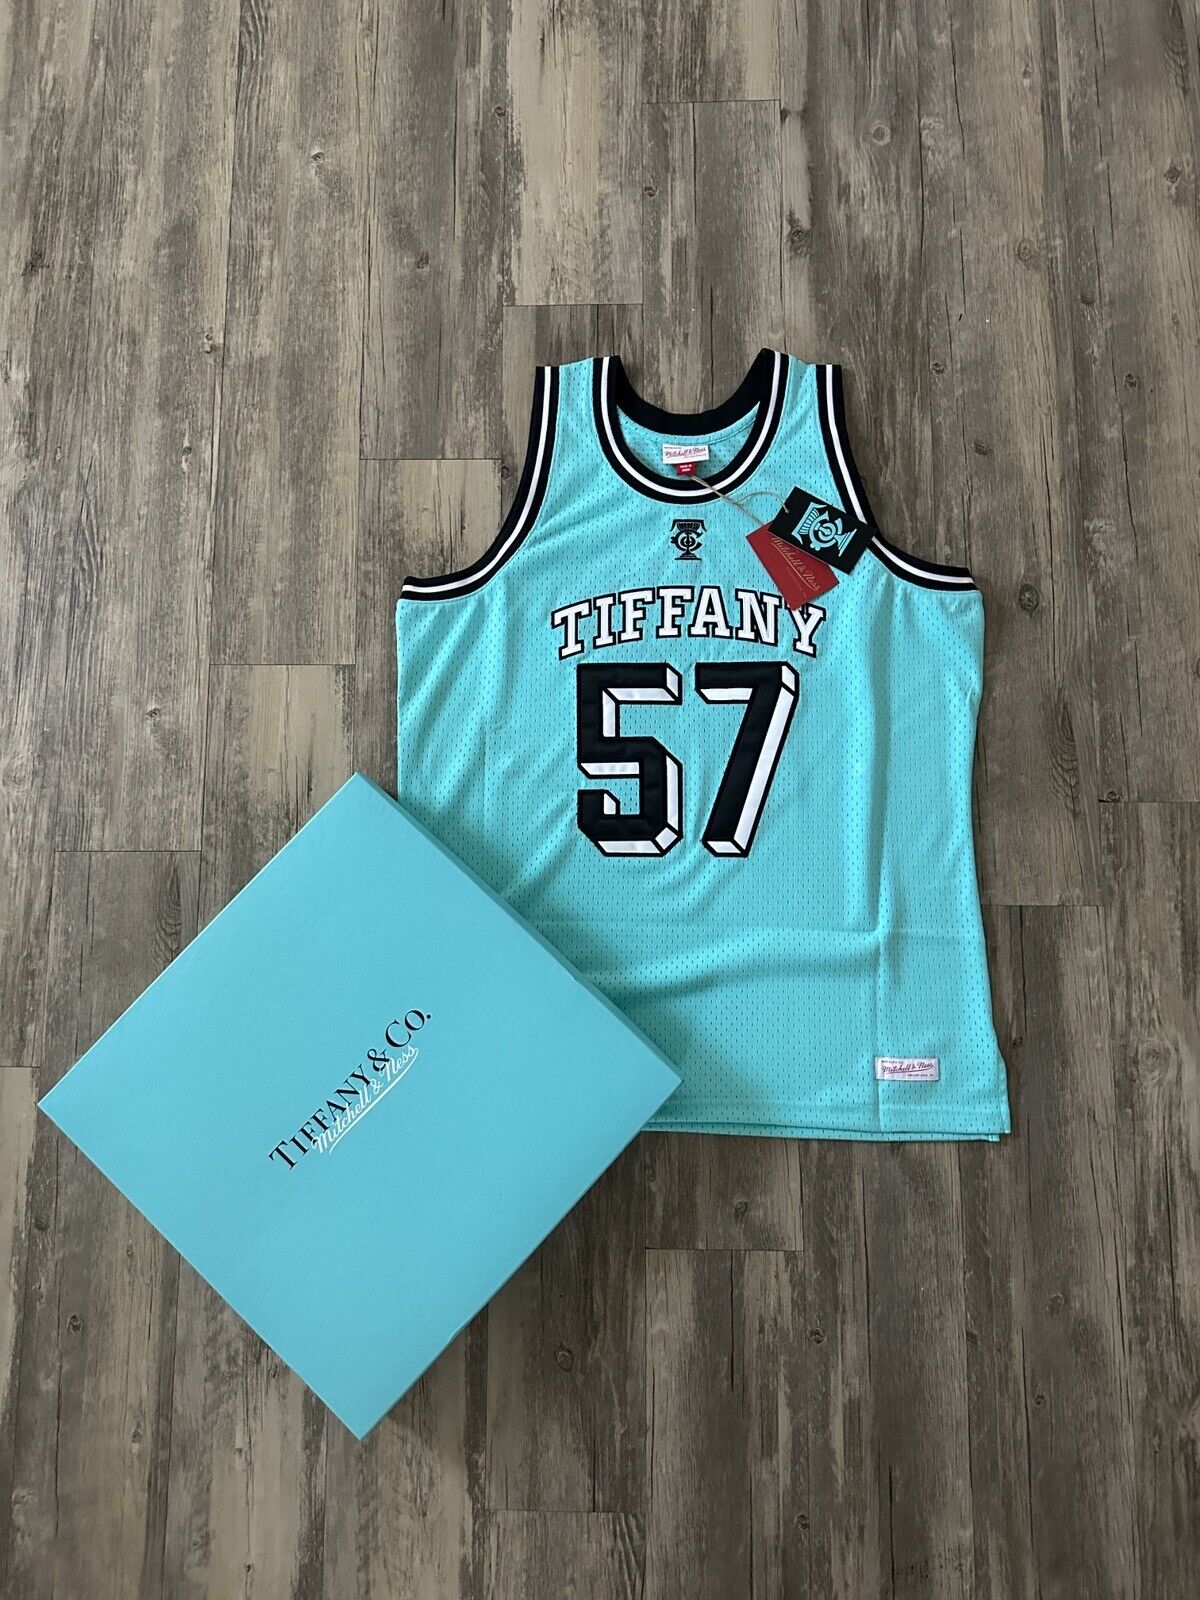 Tiffany & Co x Mitchell & Ness Basketball Jersey SIZE XL RARE VTG 